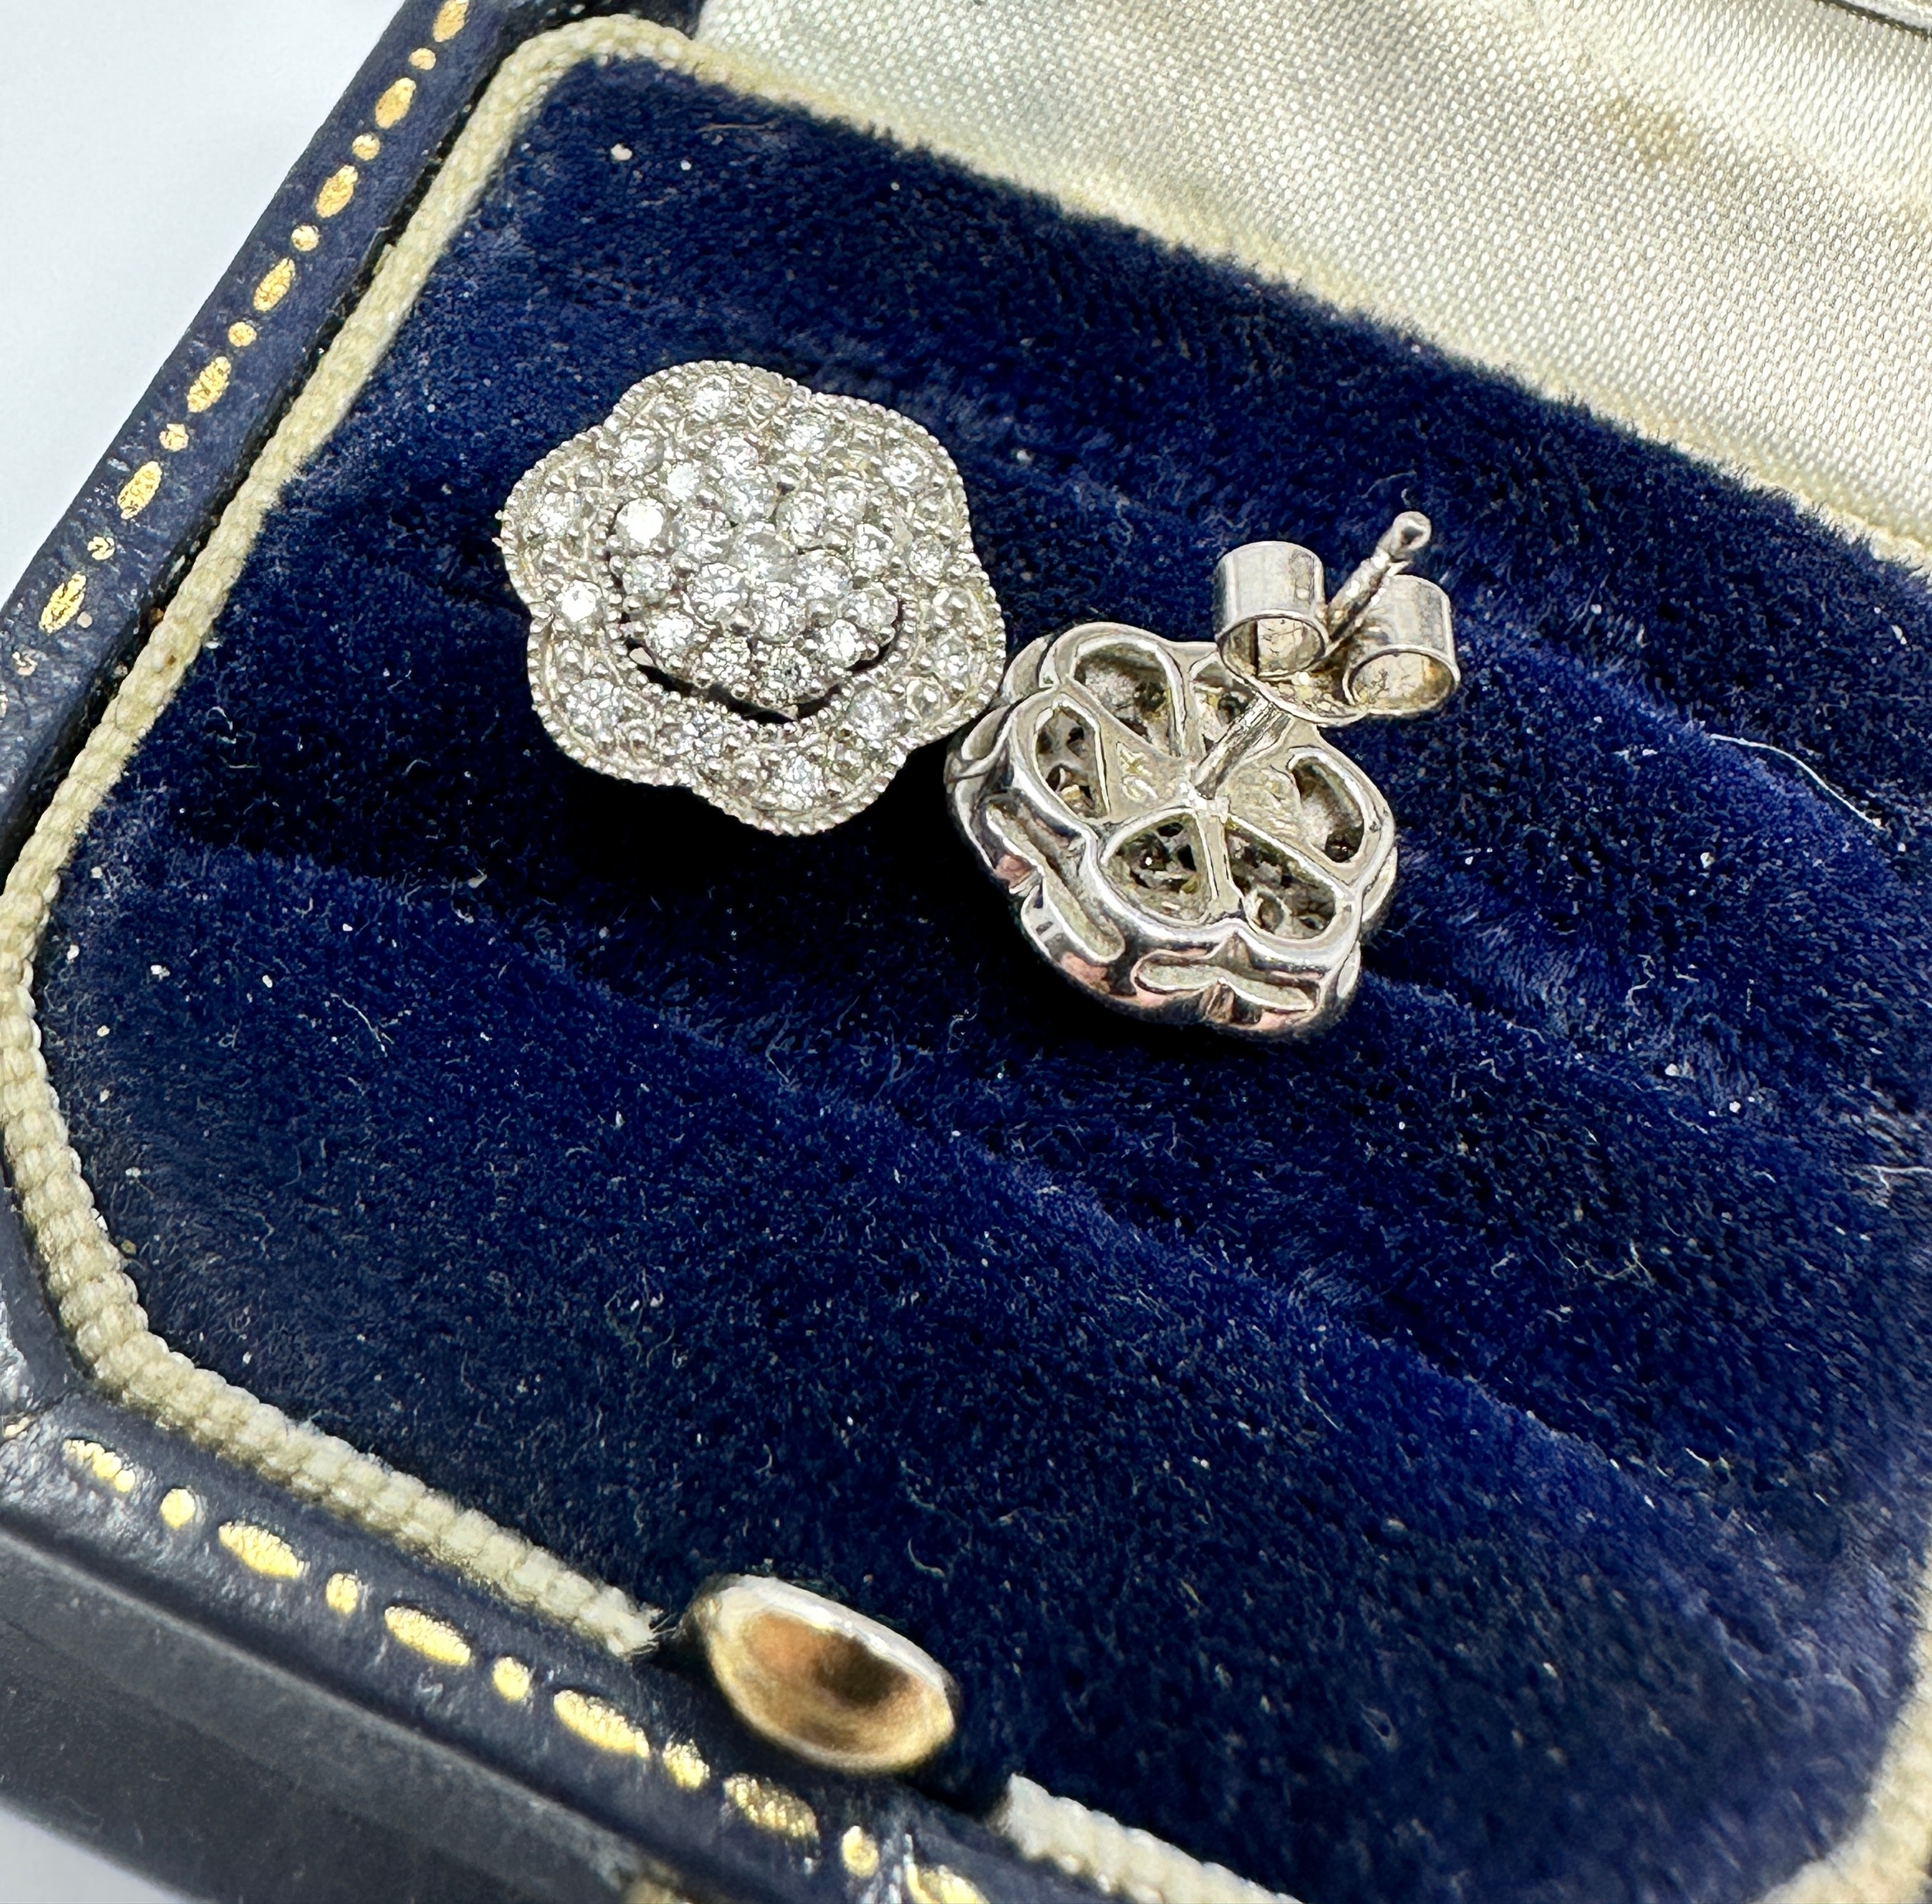 9ct gold diamond earrings .40ct diamonds weight 2.3g - Image 4 of 4